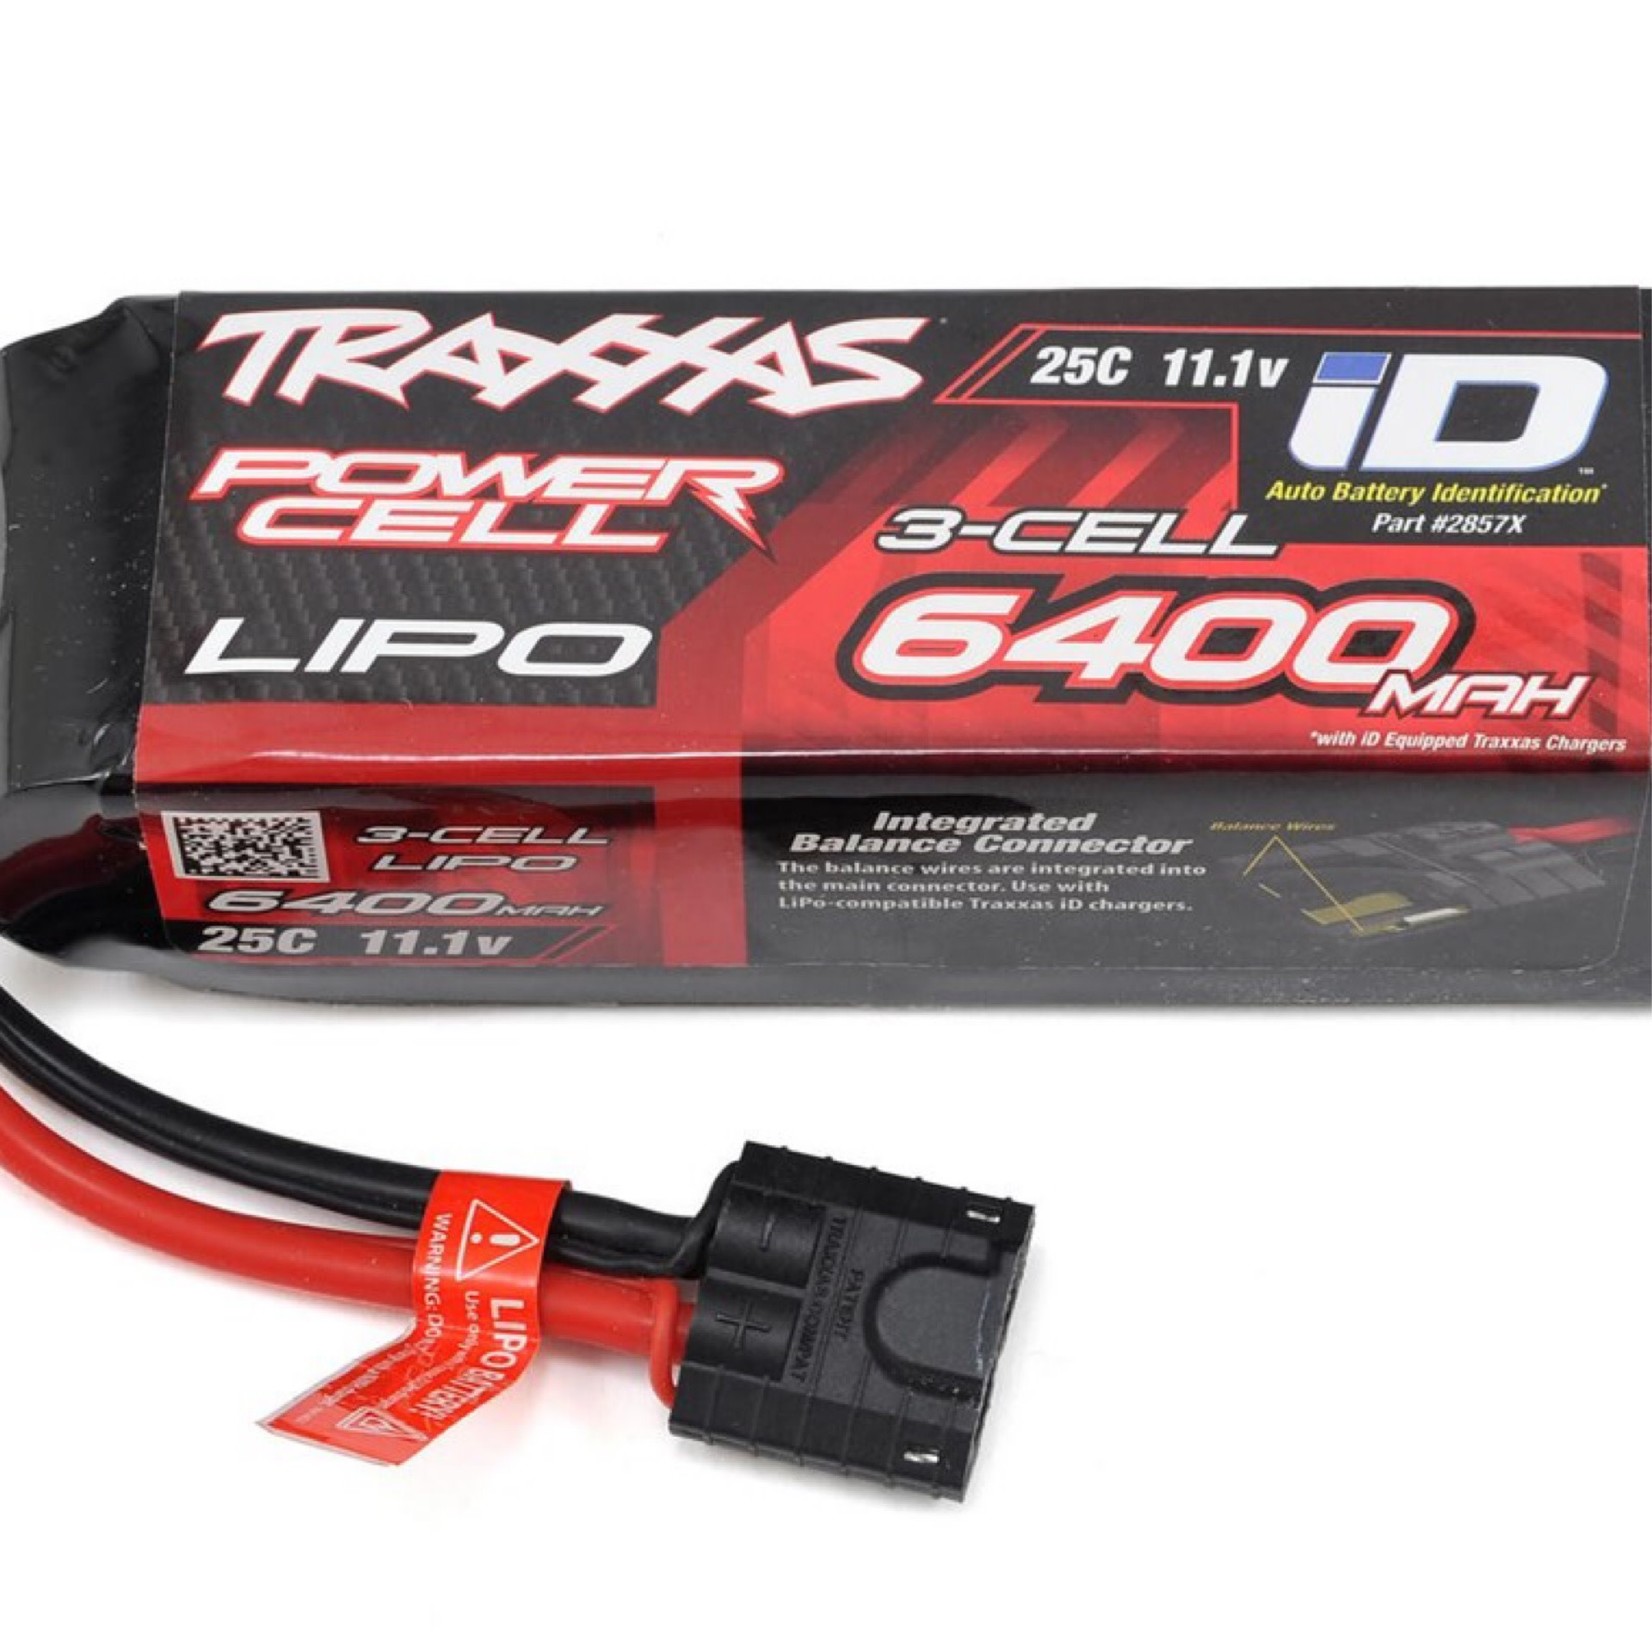 Traxxas Traxxas 3S "Power Cell" 25C LiPo Battery w/iD Traxxas Connector (11.1V/6400mAh) #2857X